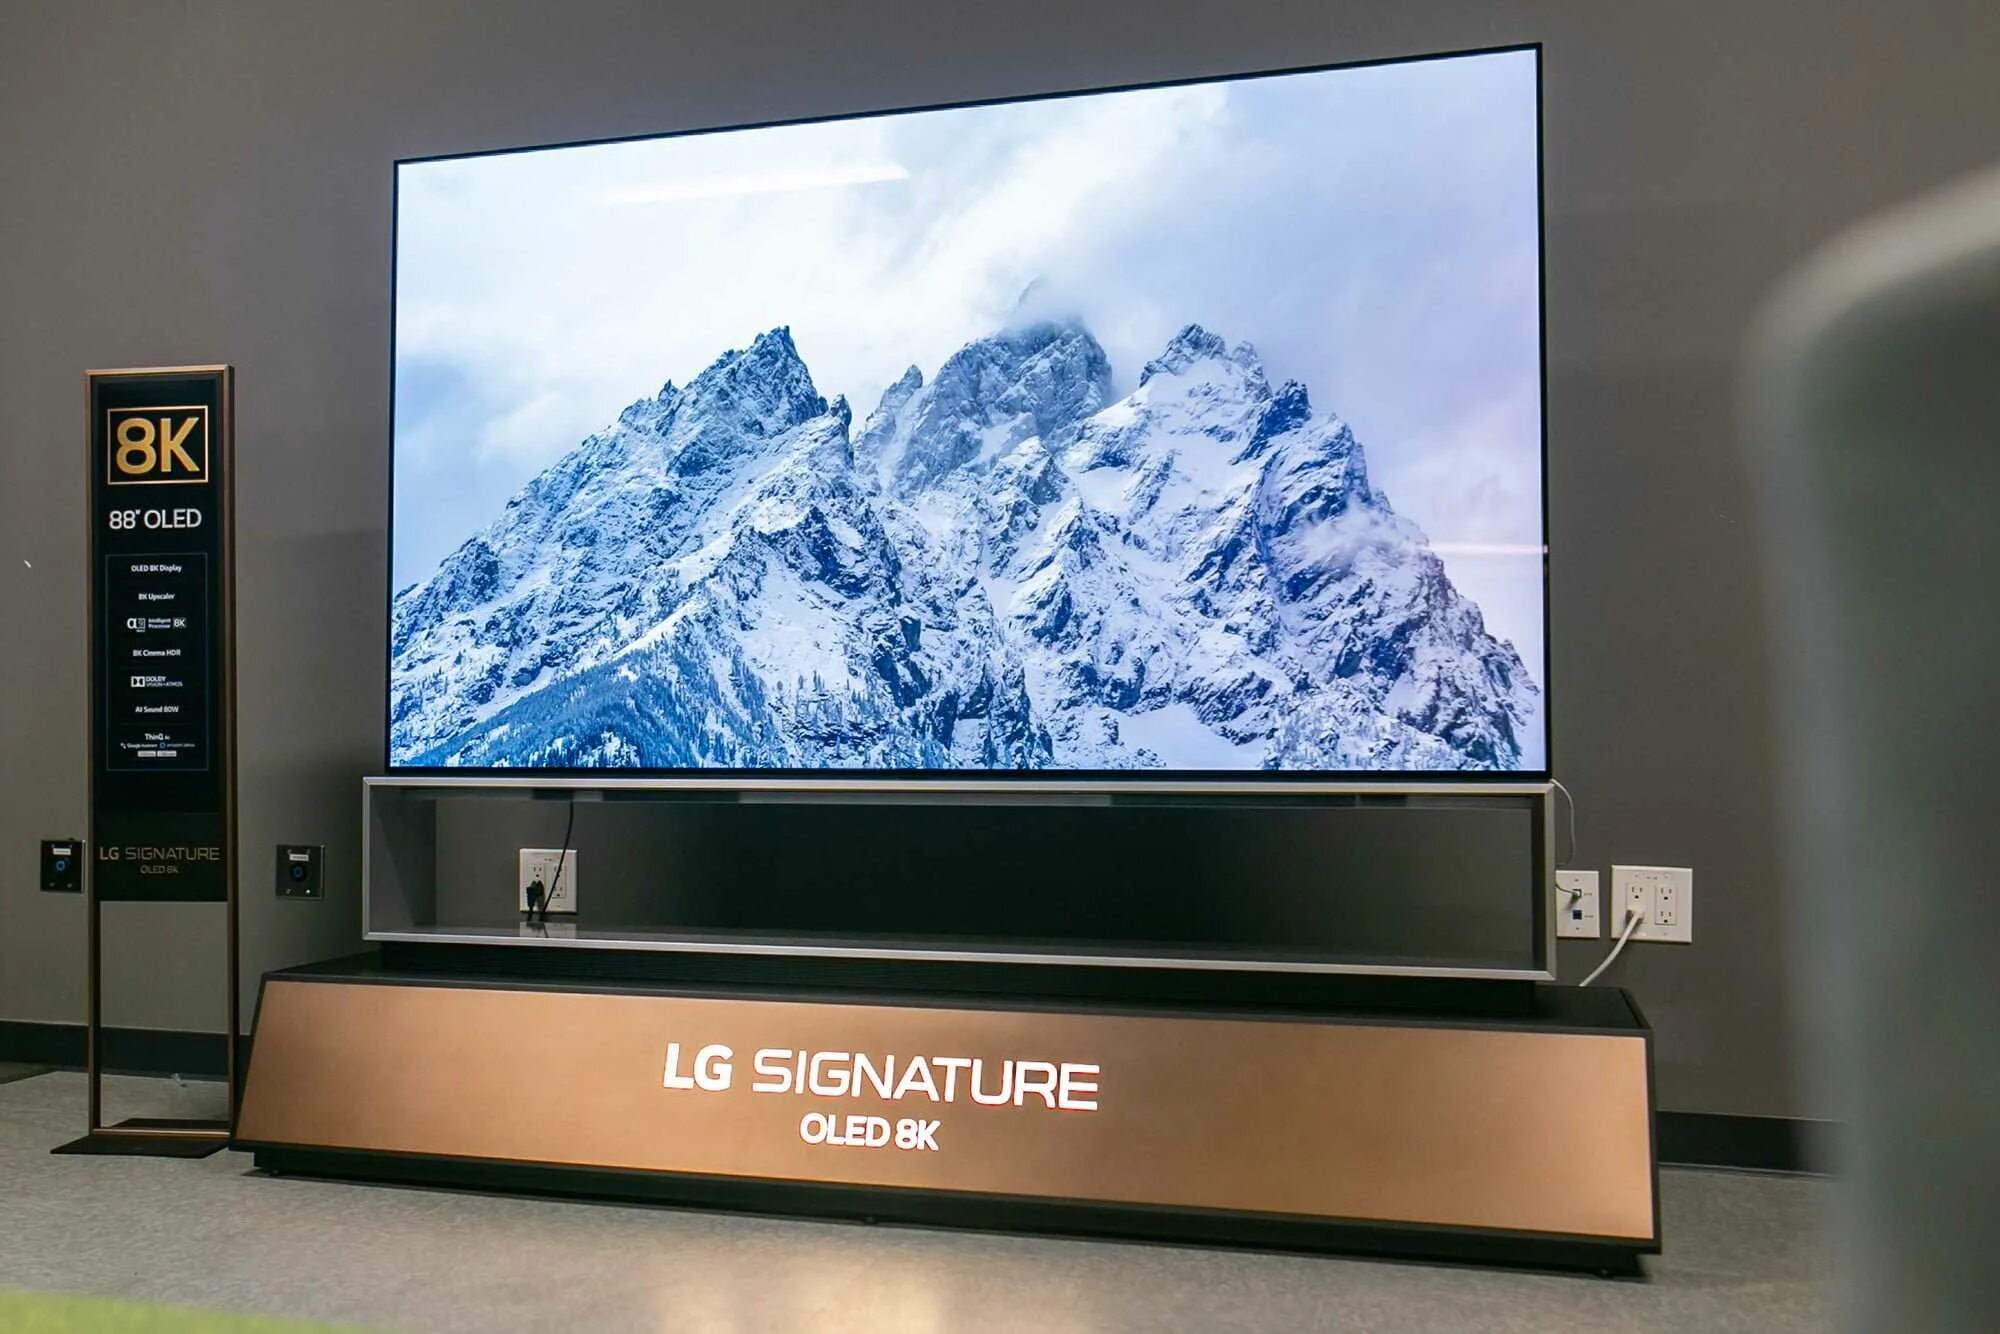 LG Signature 88 8k OLED. LG oled88zx9. Телевизор LG Signature 88 дюймов. LG Signature 88 8k OLED телевизор.